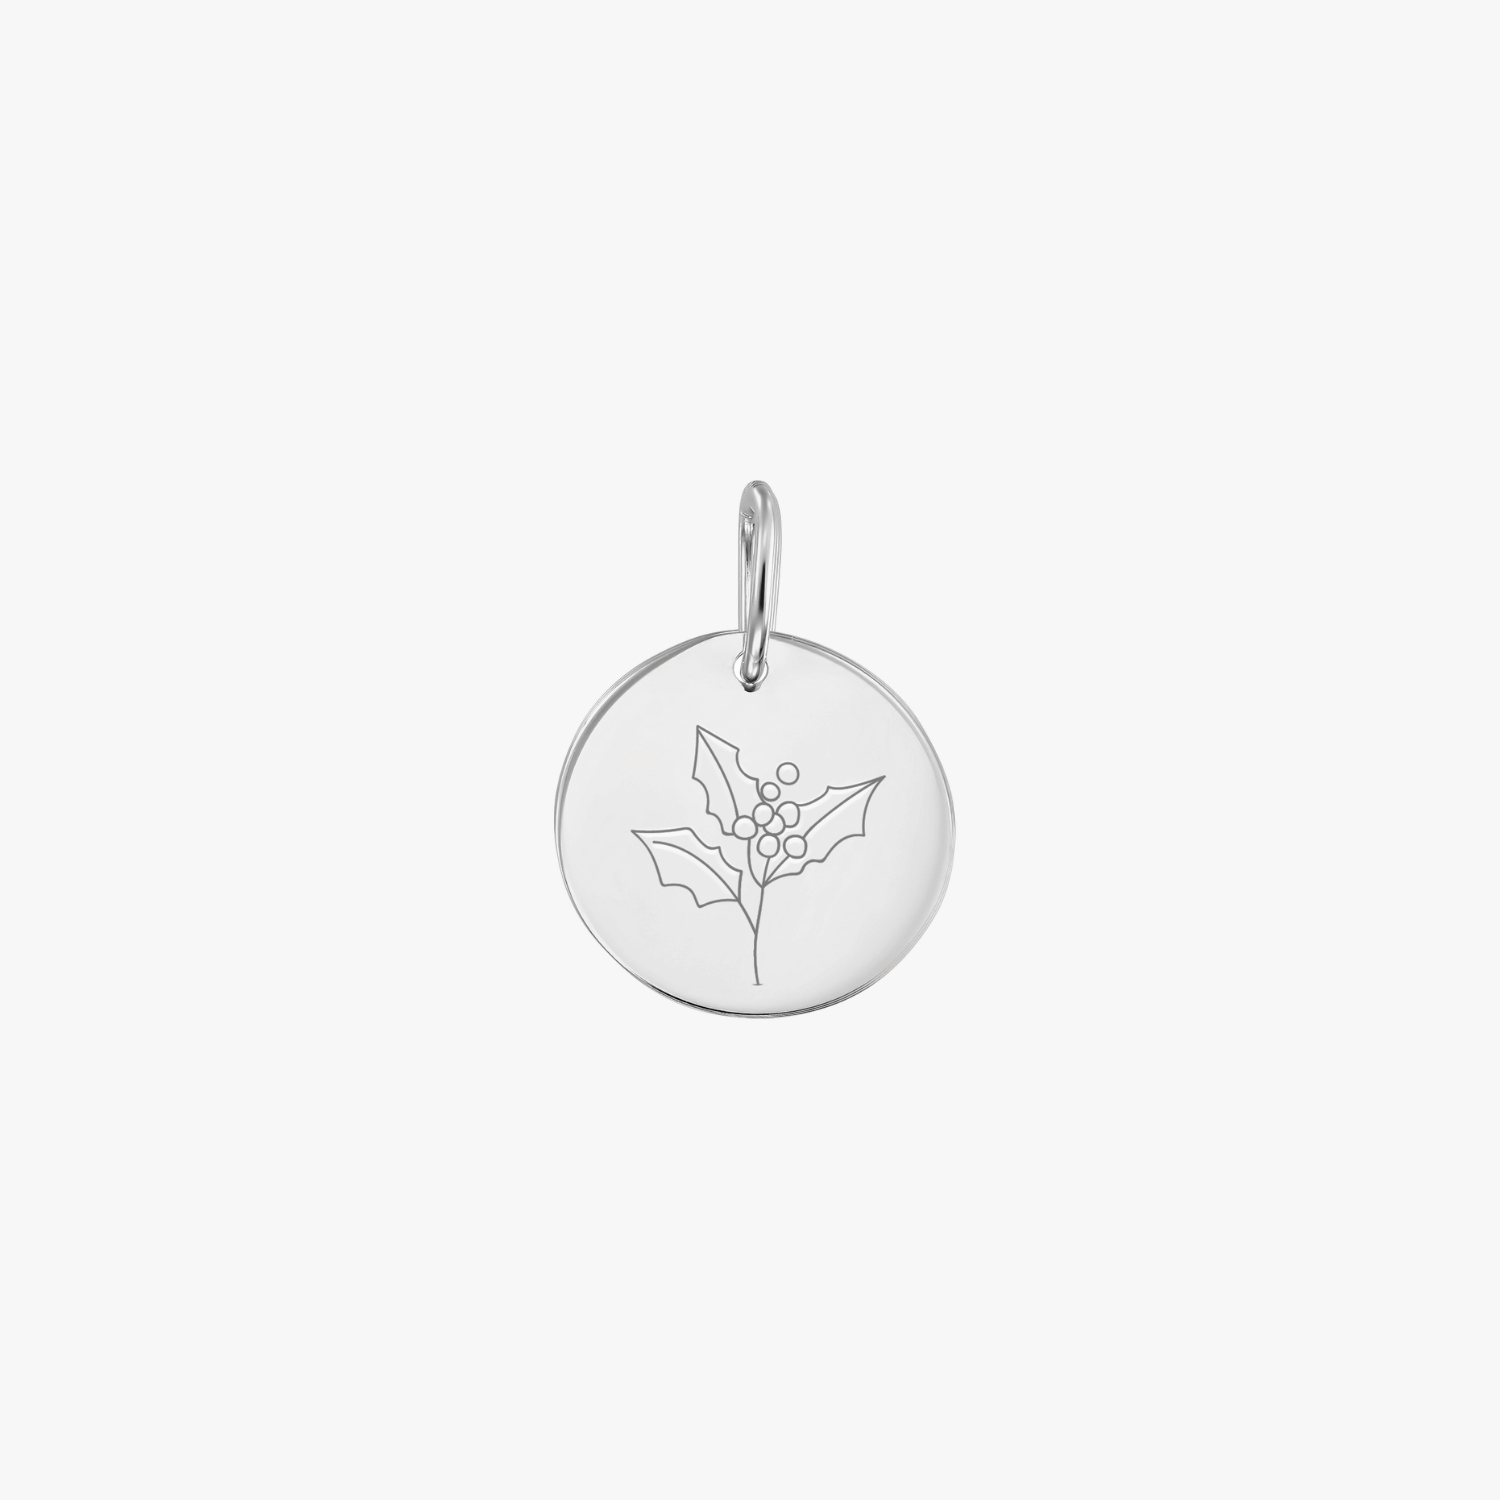 Birth Flower - December Holly white gold pendant